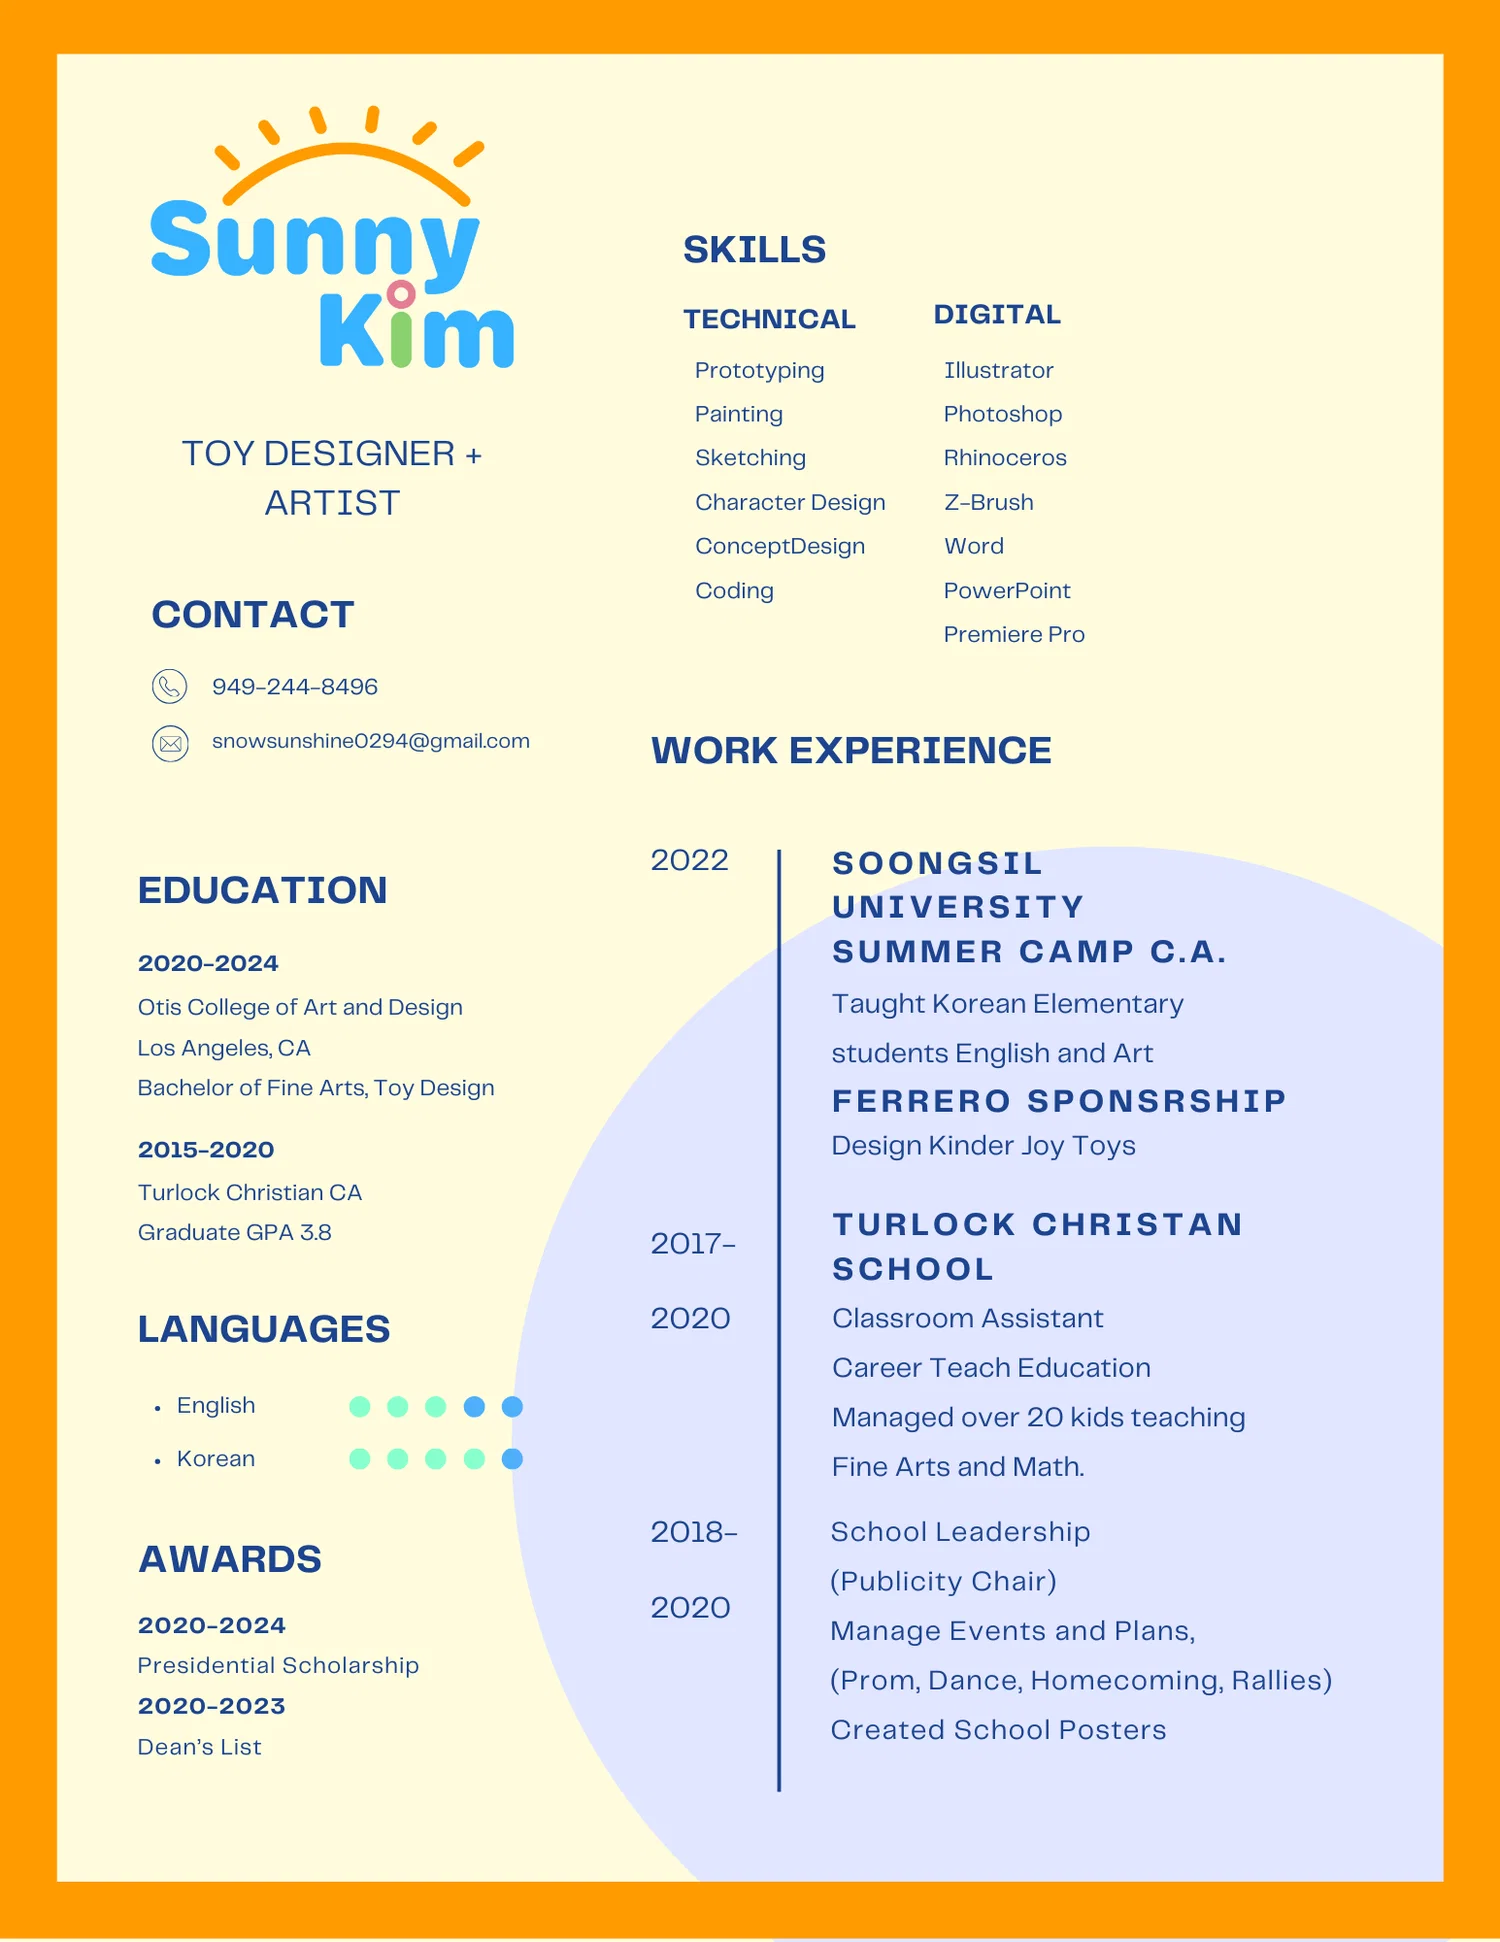 Sunny Kim